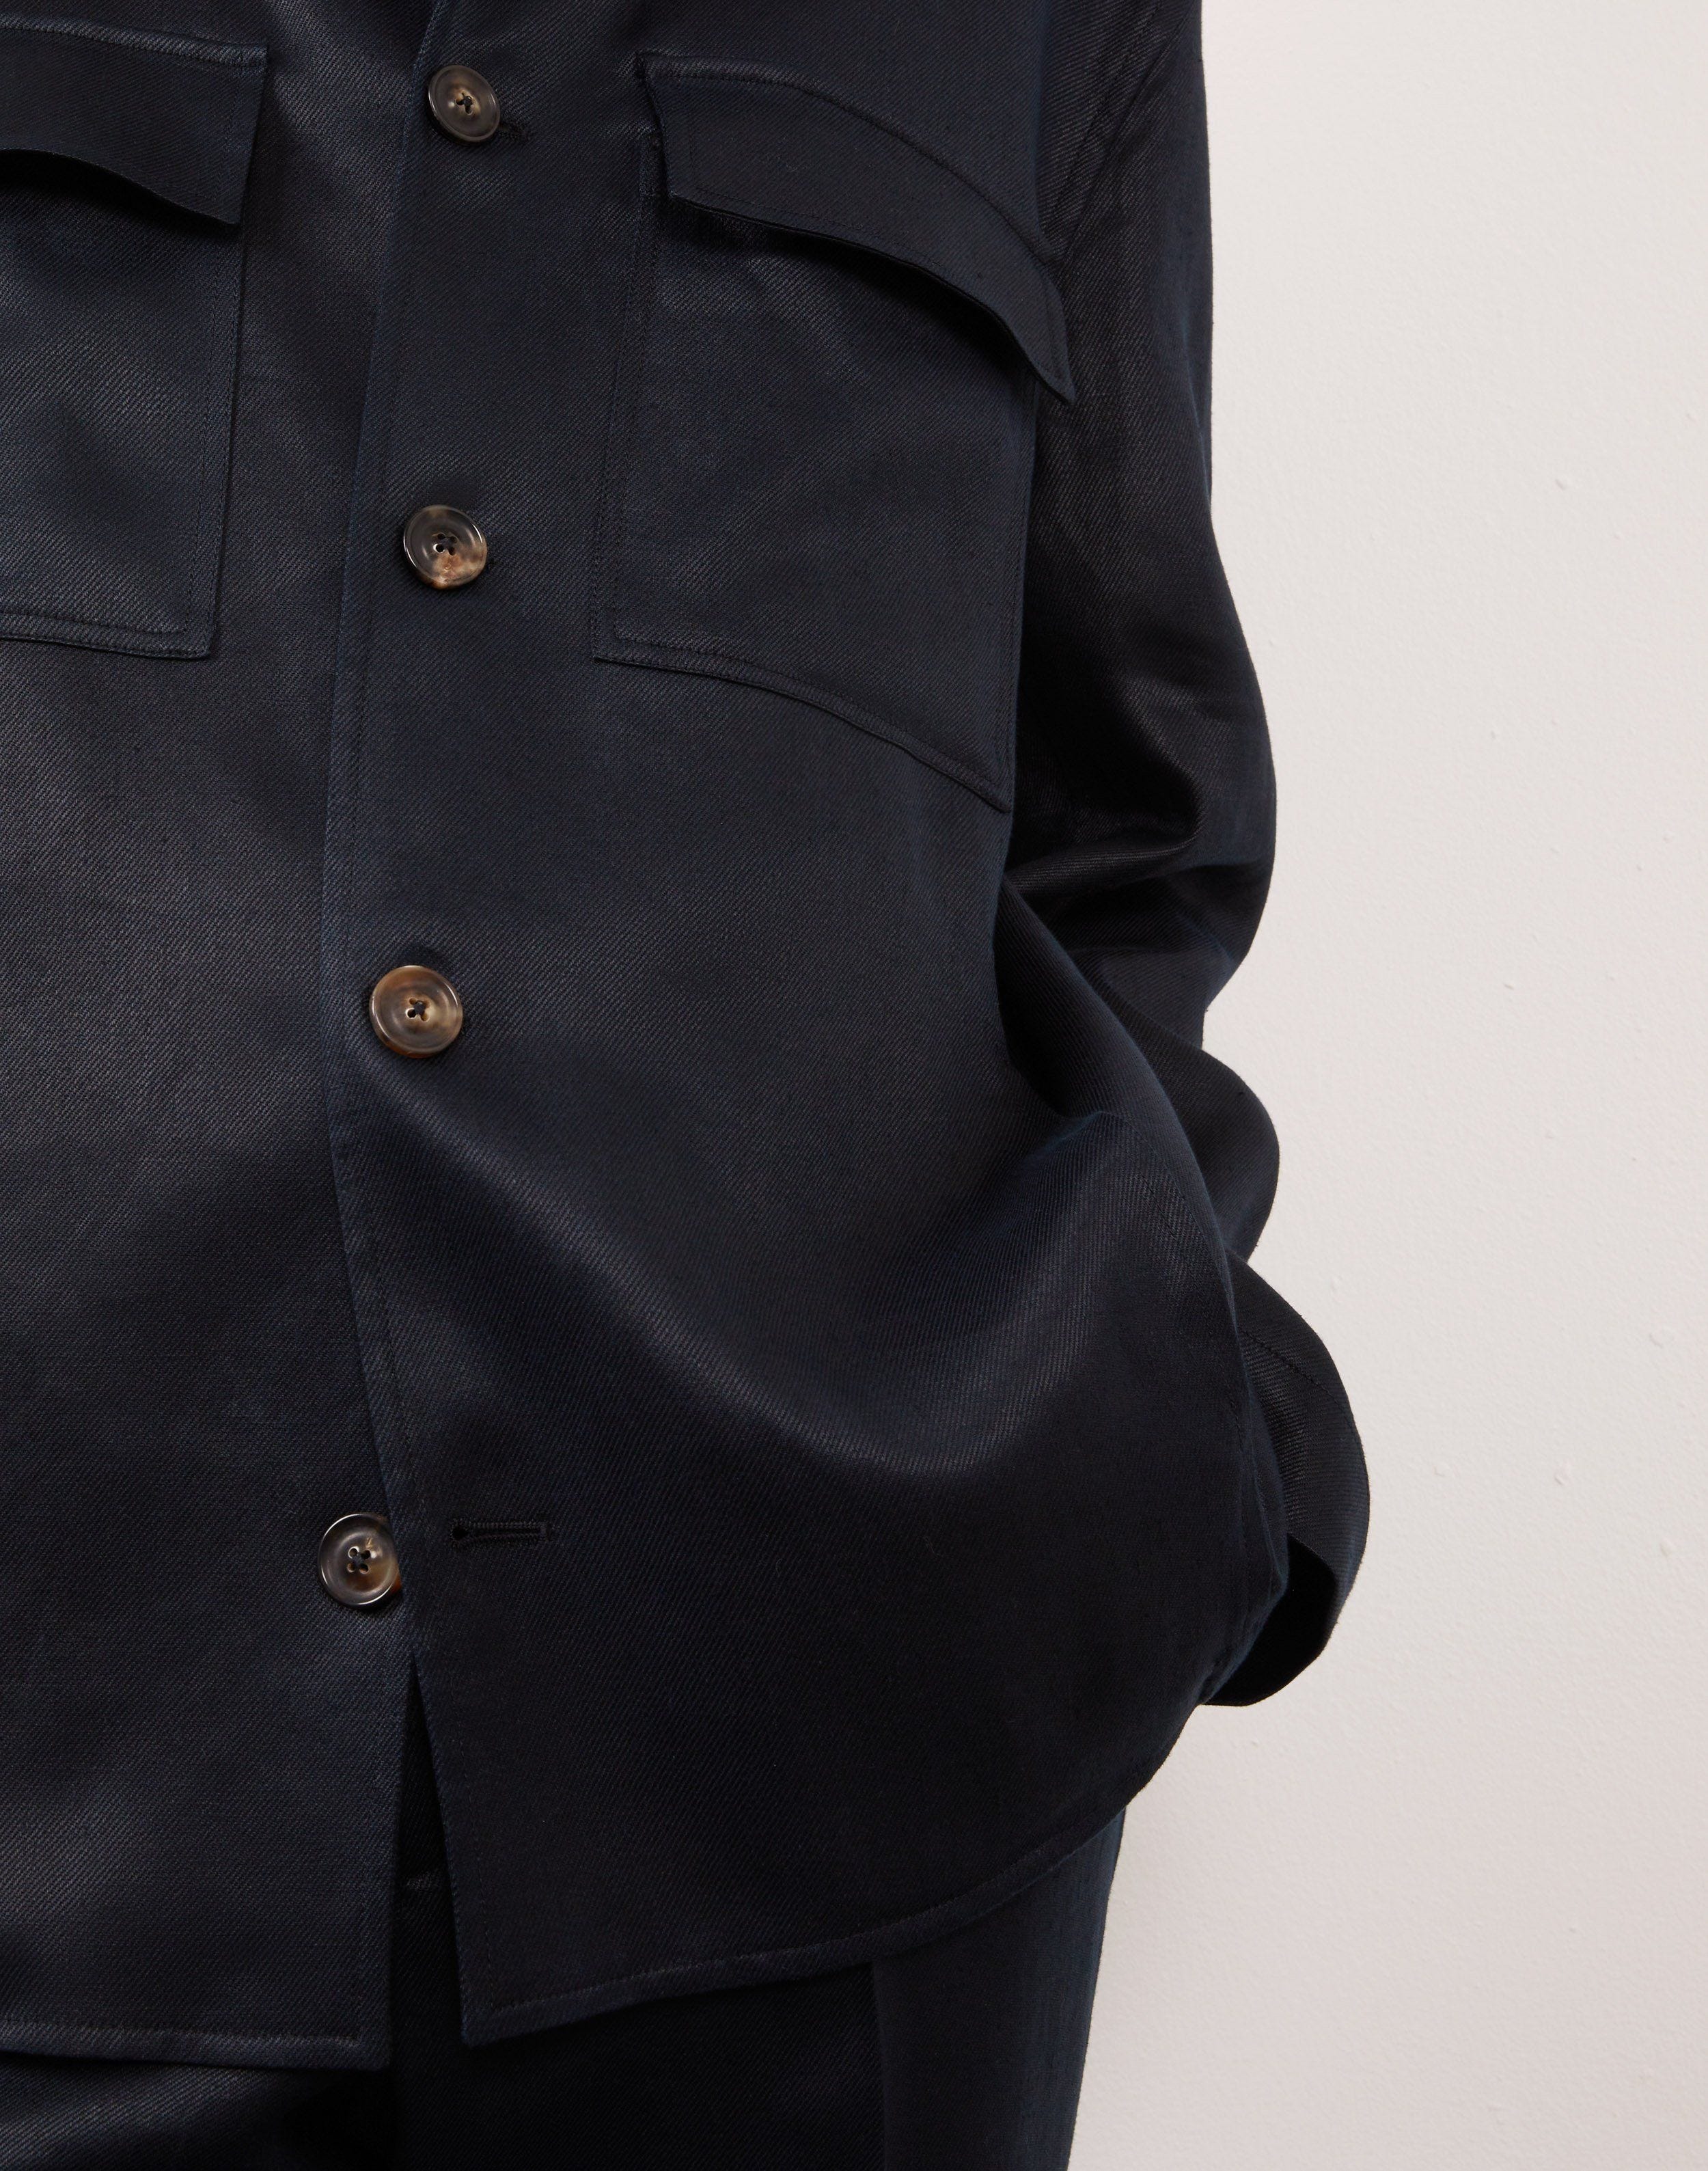 Dark blue long sleeve shirt jacket